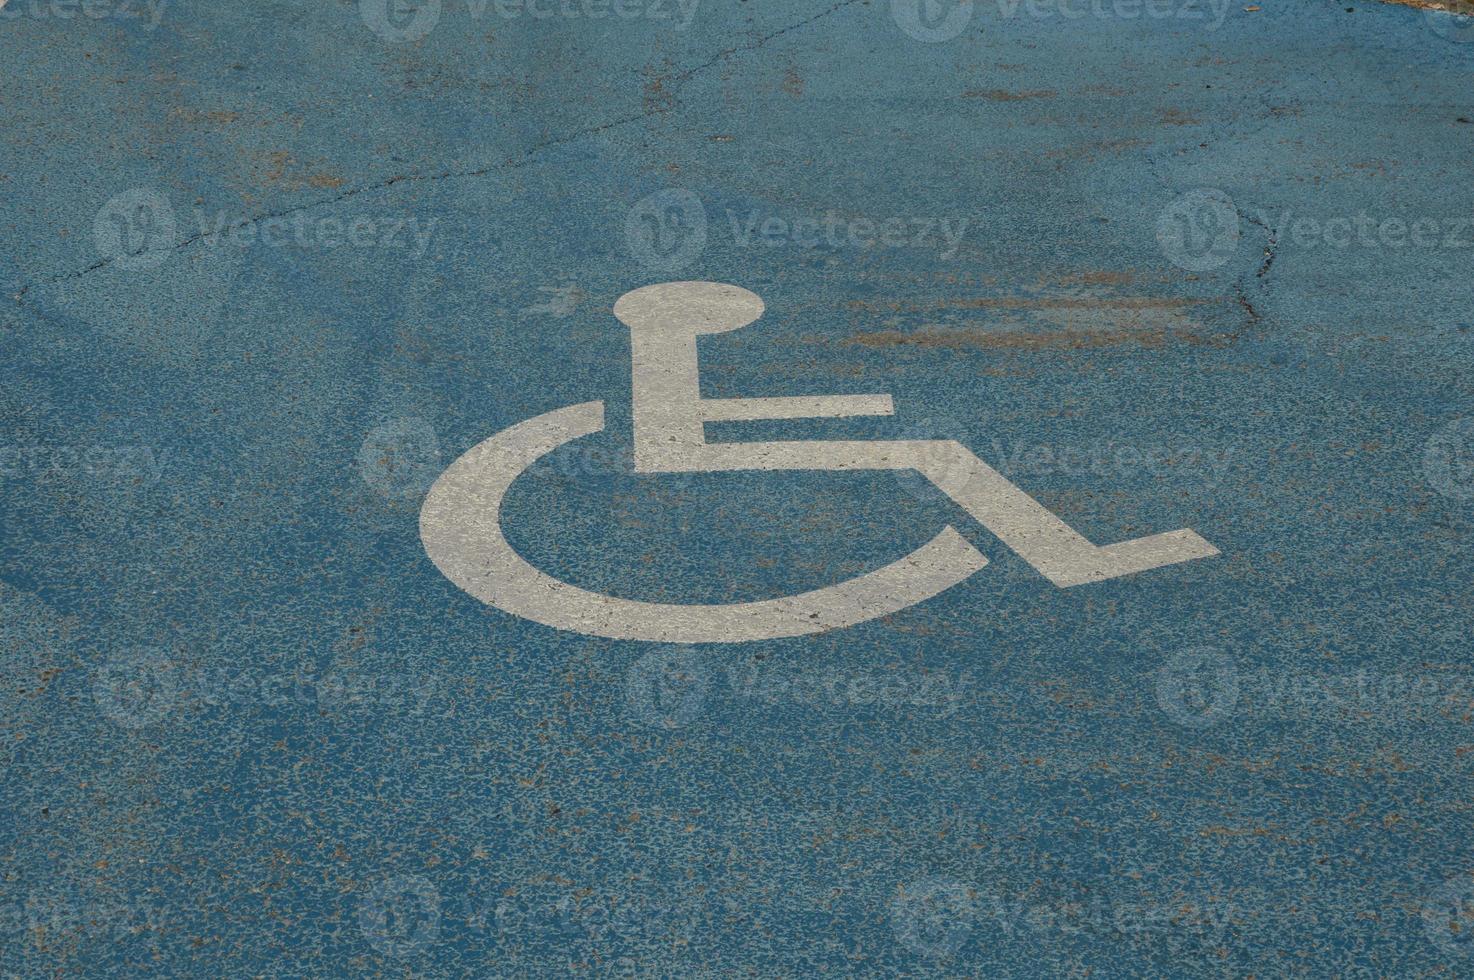 Handicap parking sign photo